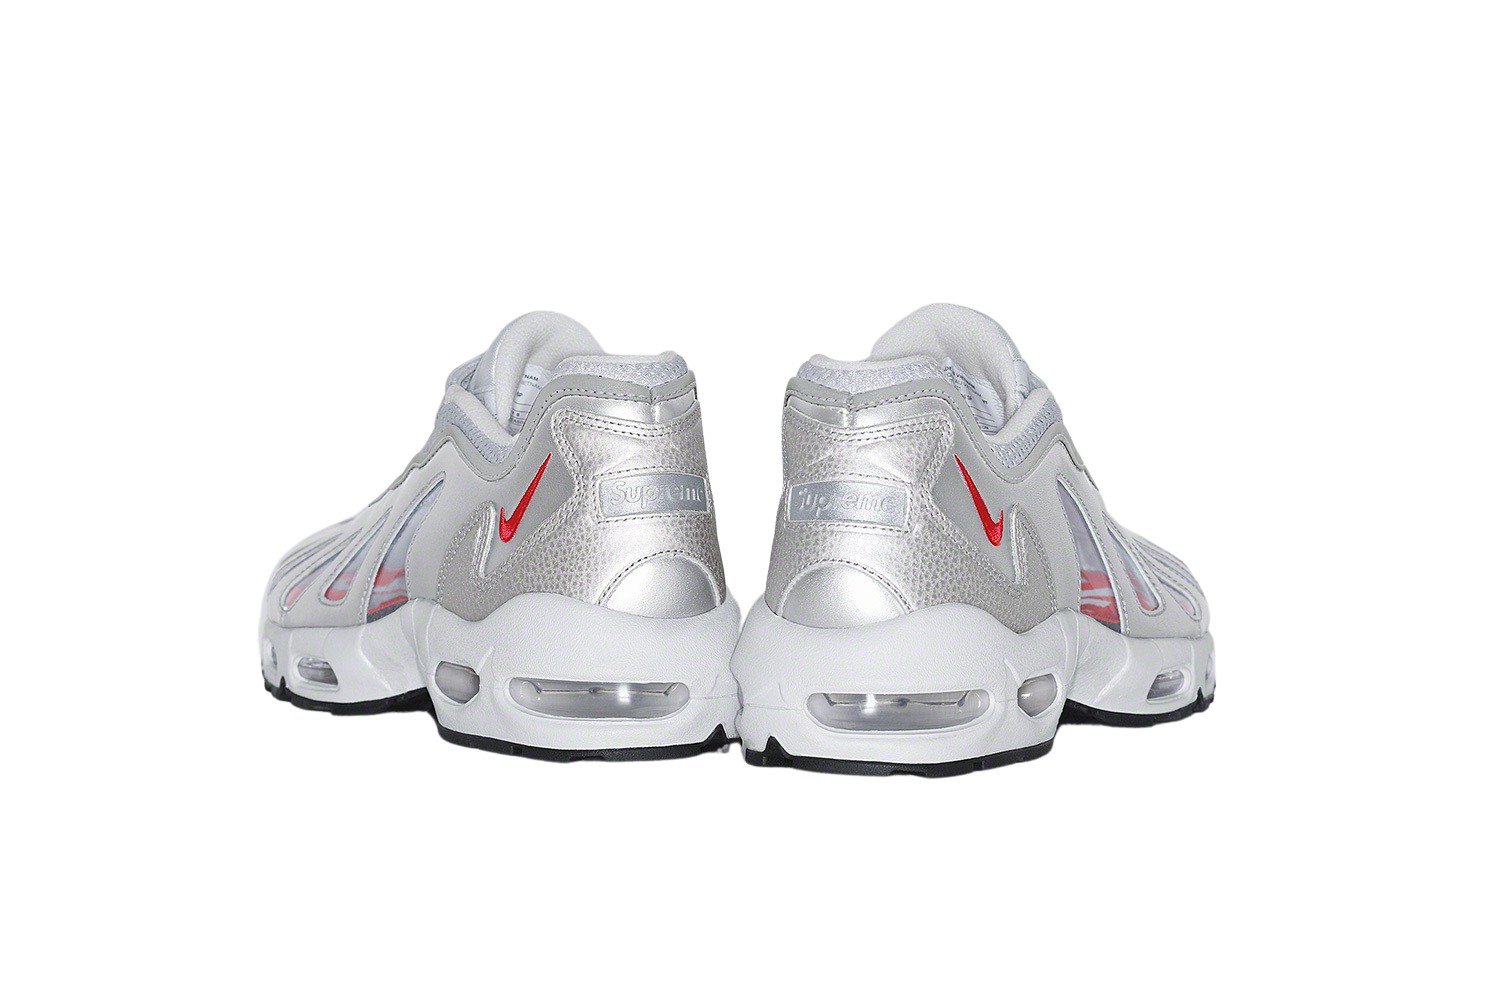 Supreme®/Nike® Air Max 96 — La Suprema Calidad